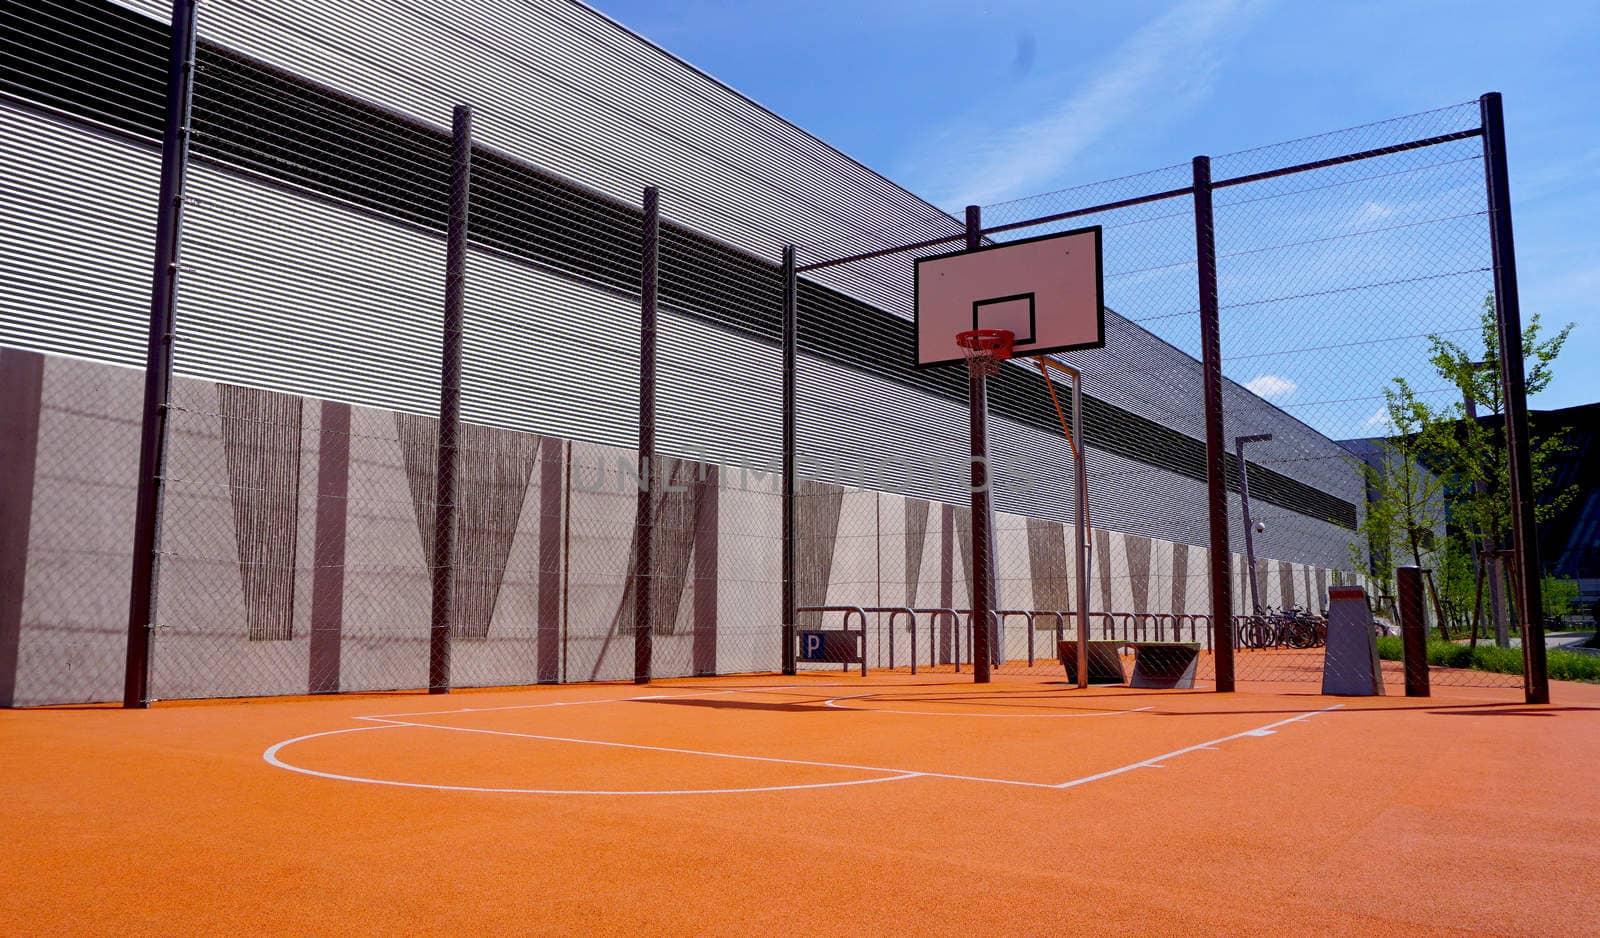 Basketball court outdoor public by polarbearstudio